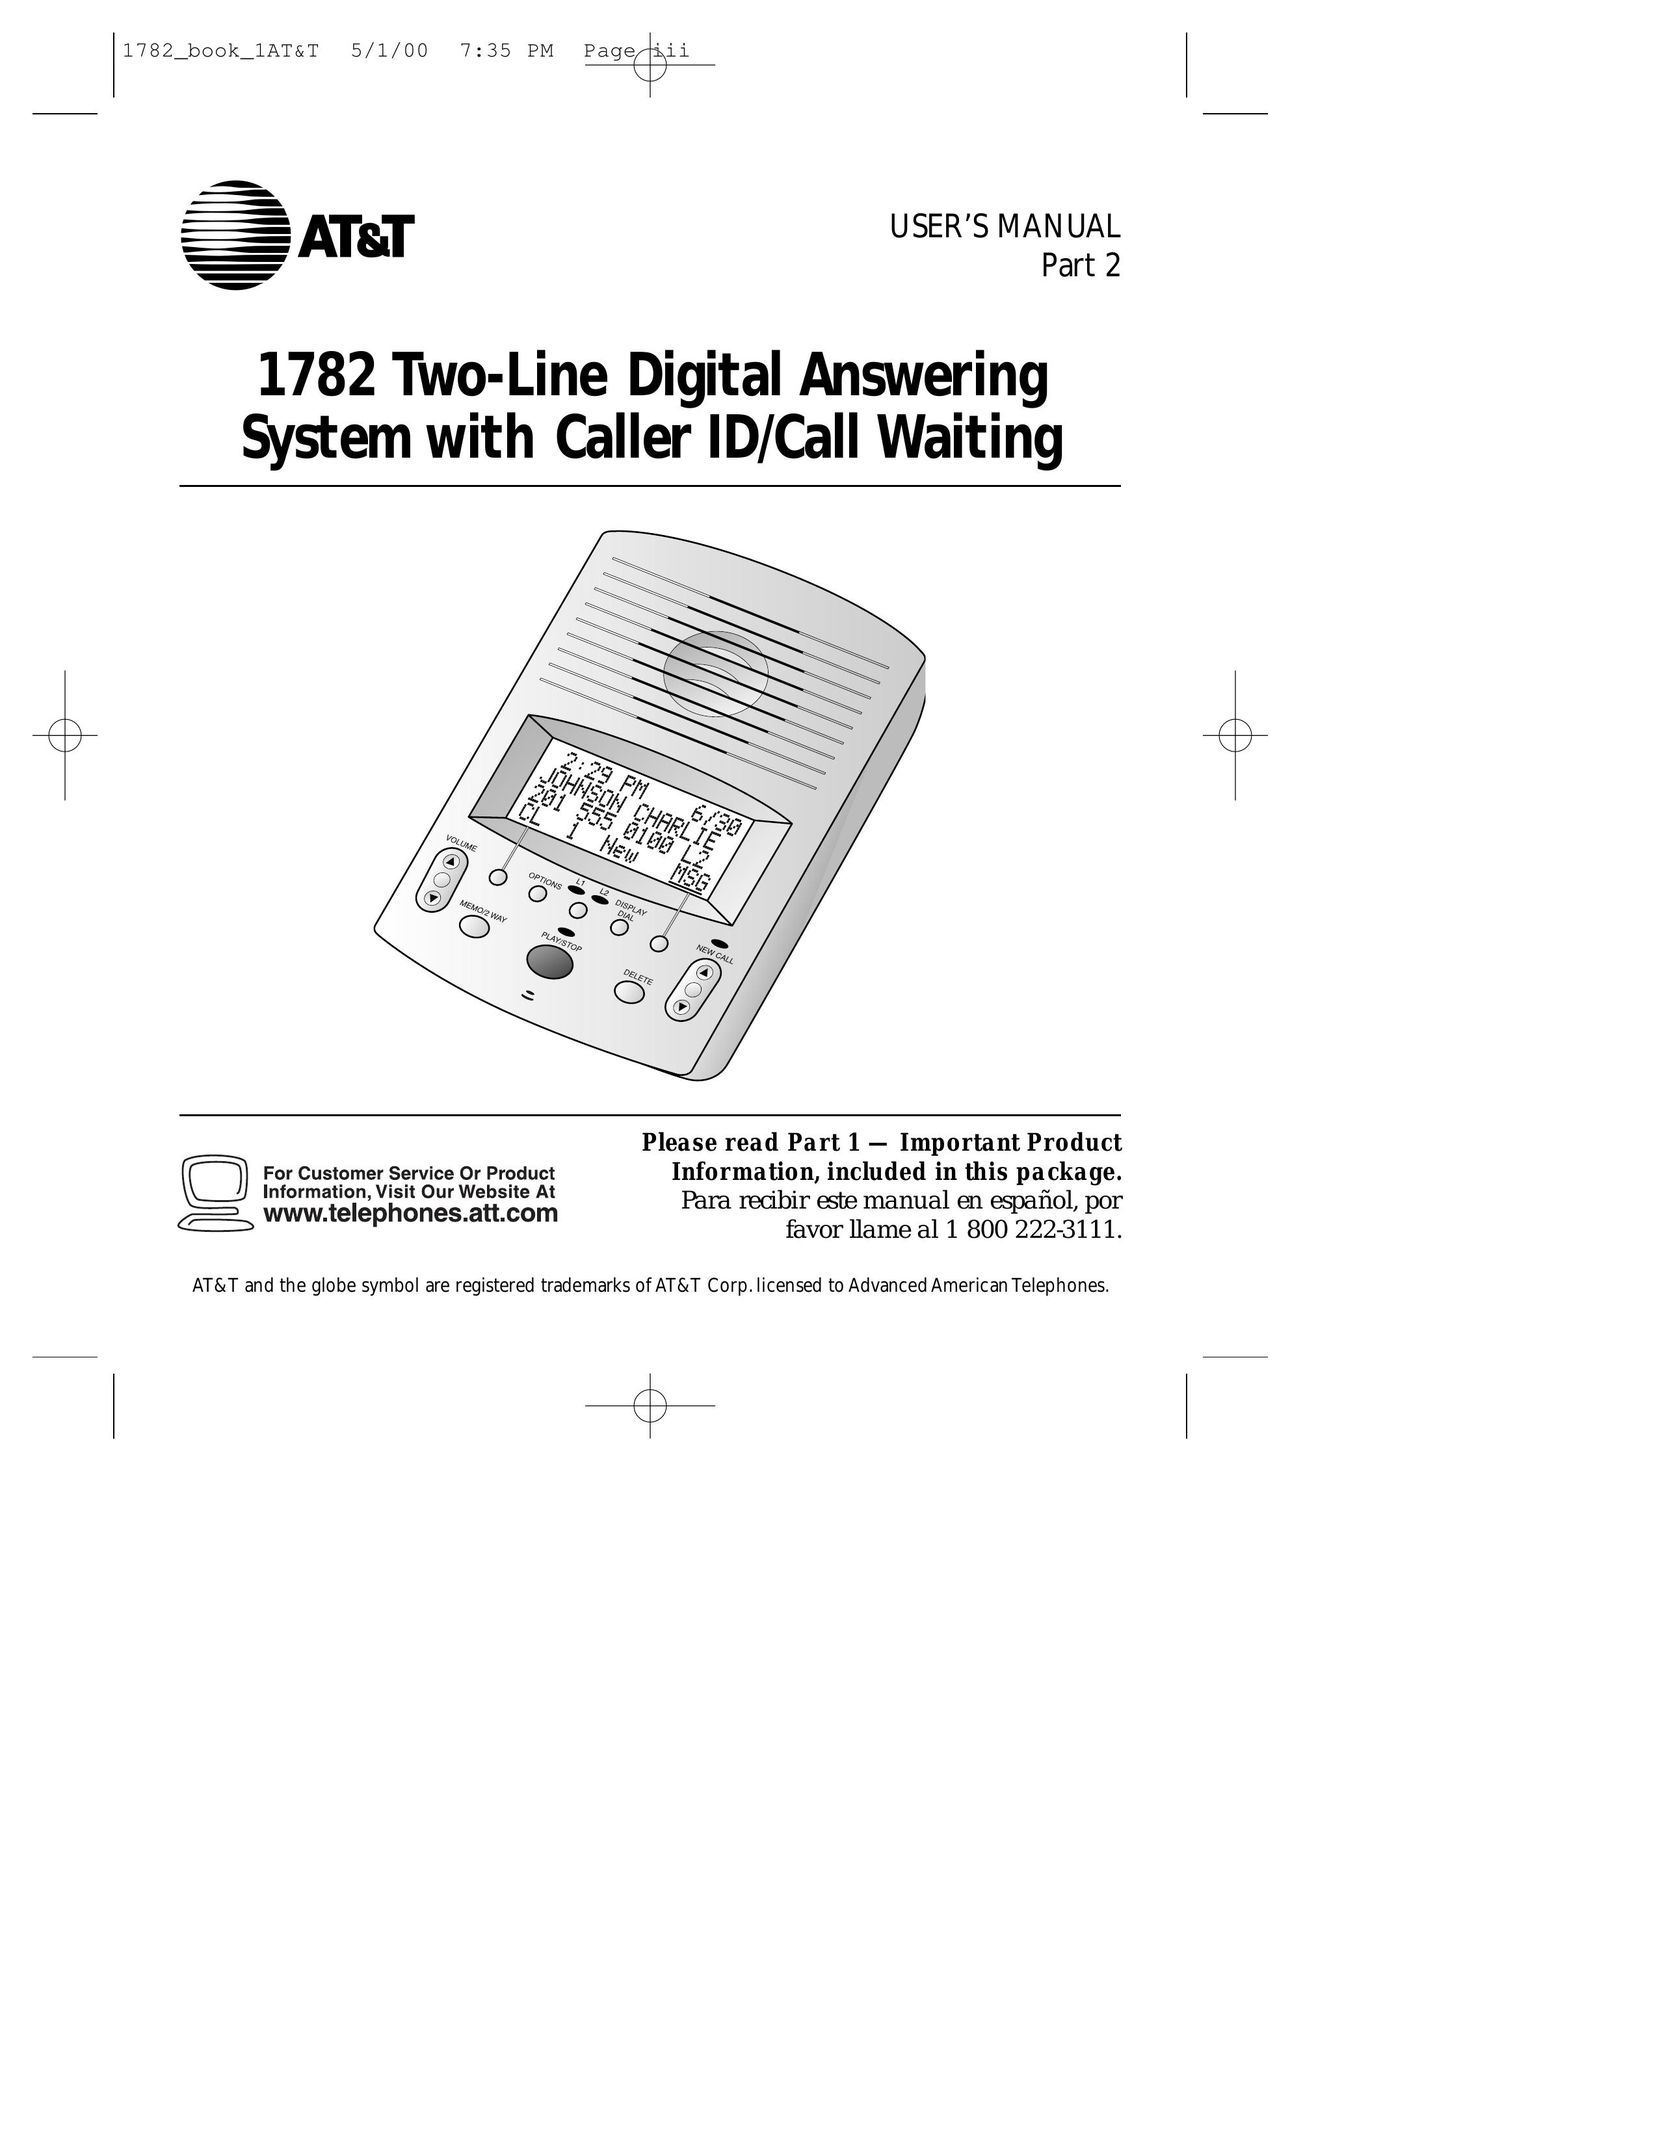 AT&T 1782 Answering Machine User Manual